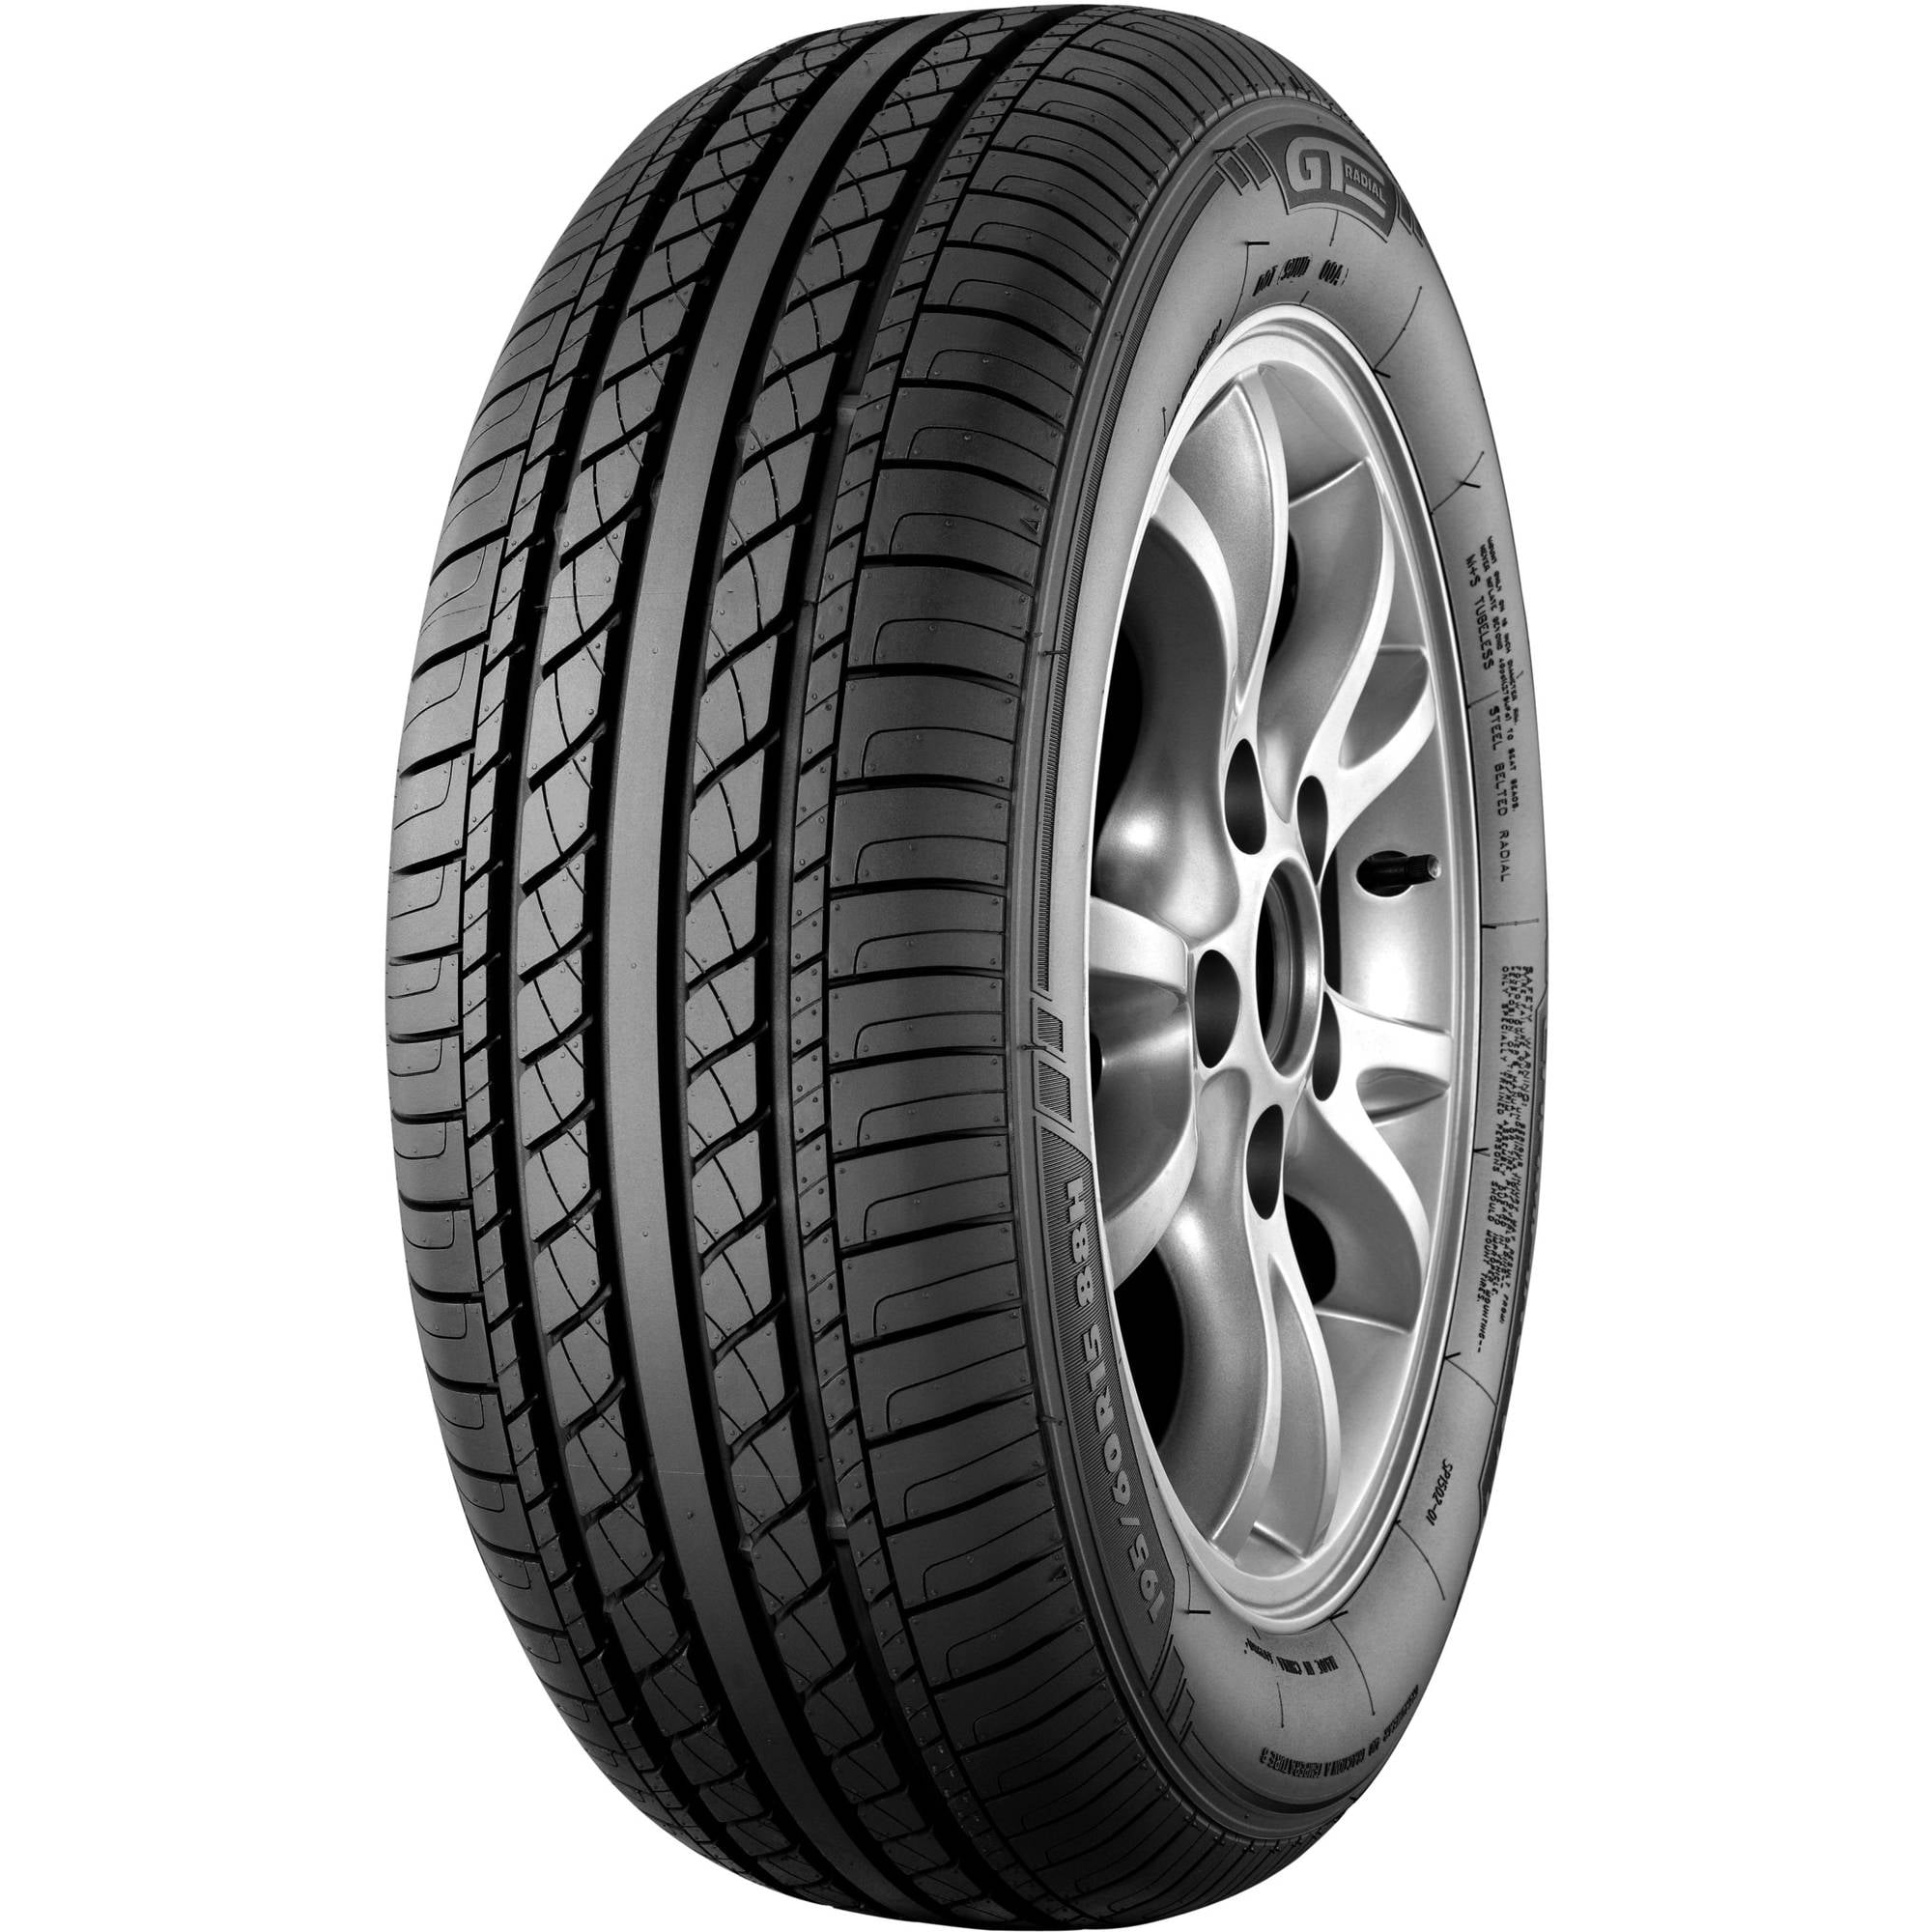 gt-radial-champiro-vp1-205-75r15-97-s-tire-walmart